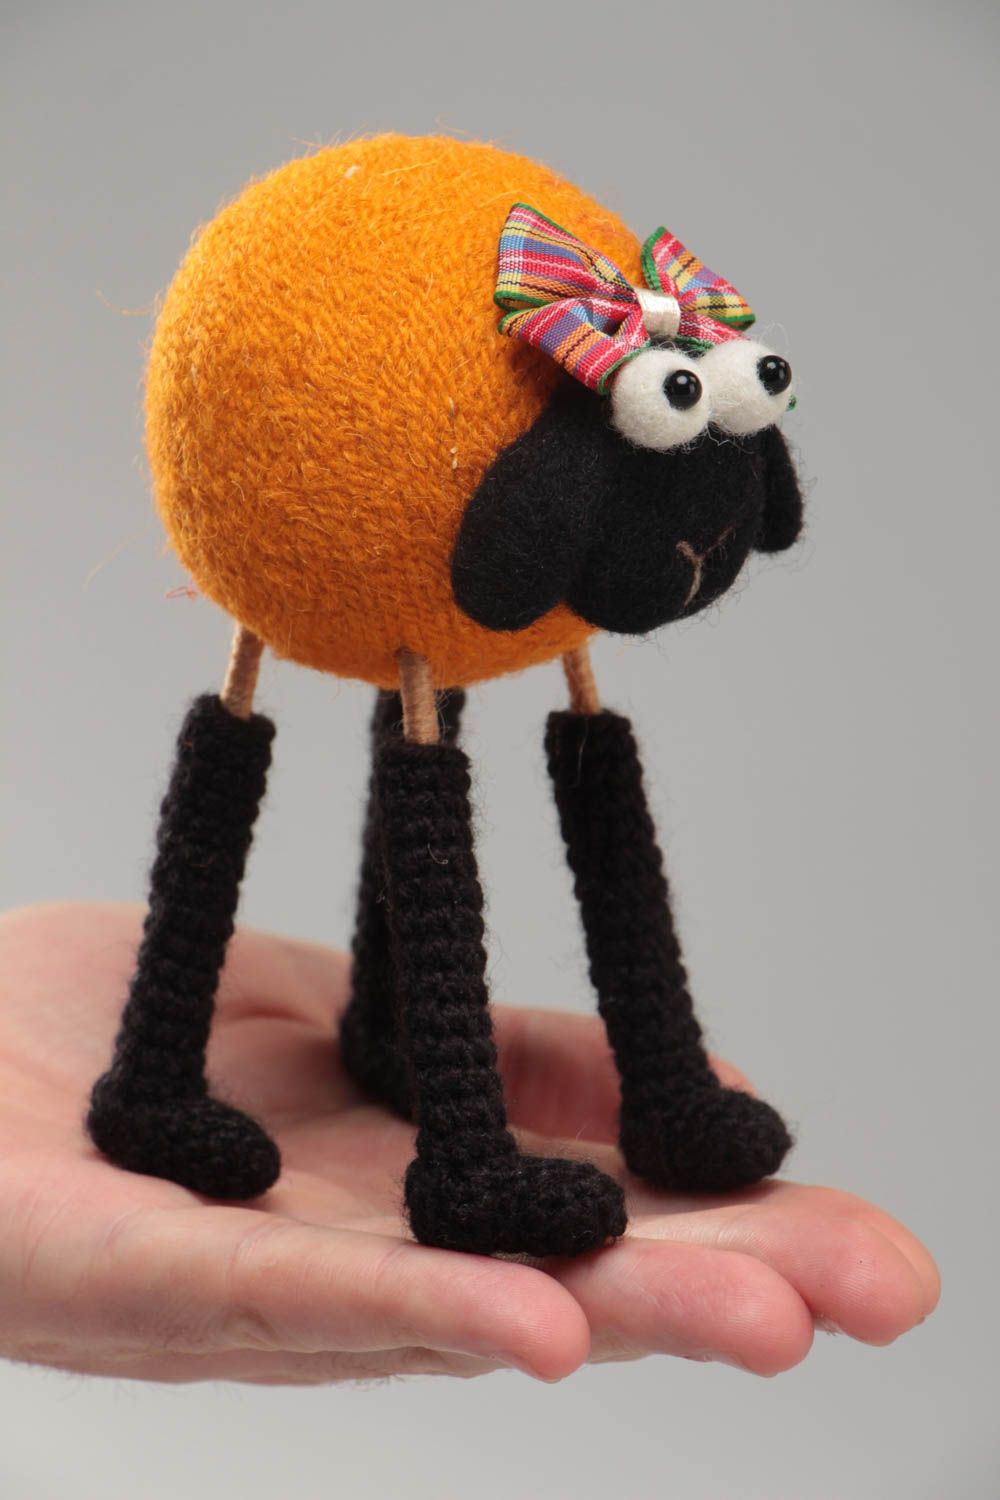 Petite peluche en feutre faite main avec noeud en ruban brebis orange amusante photo 5